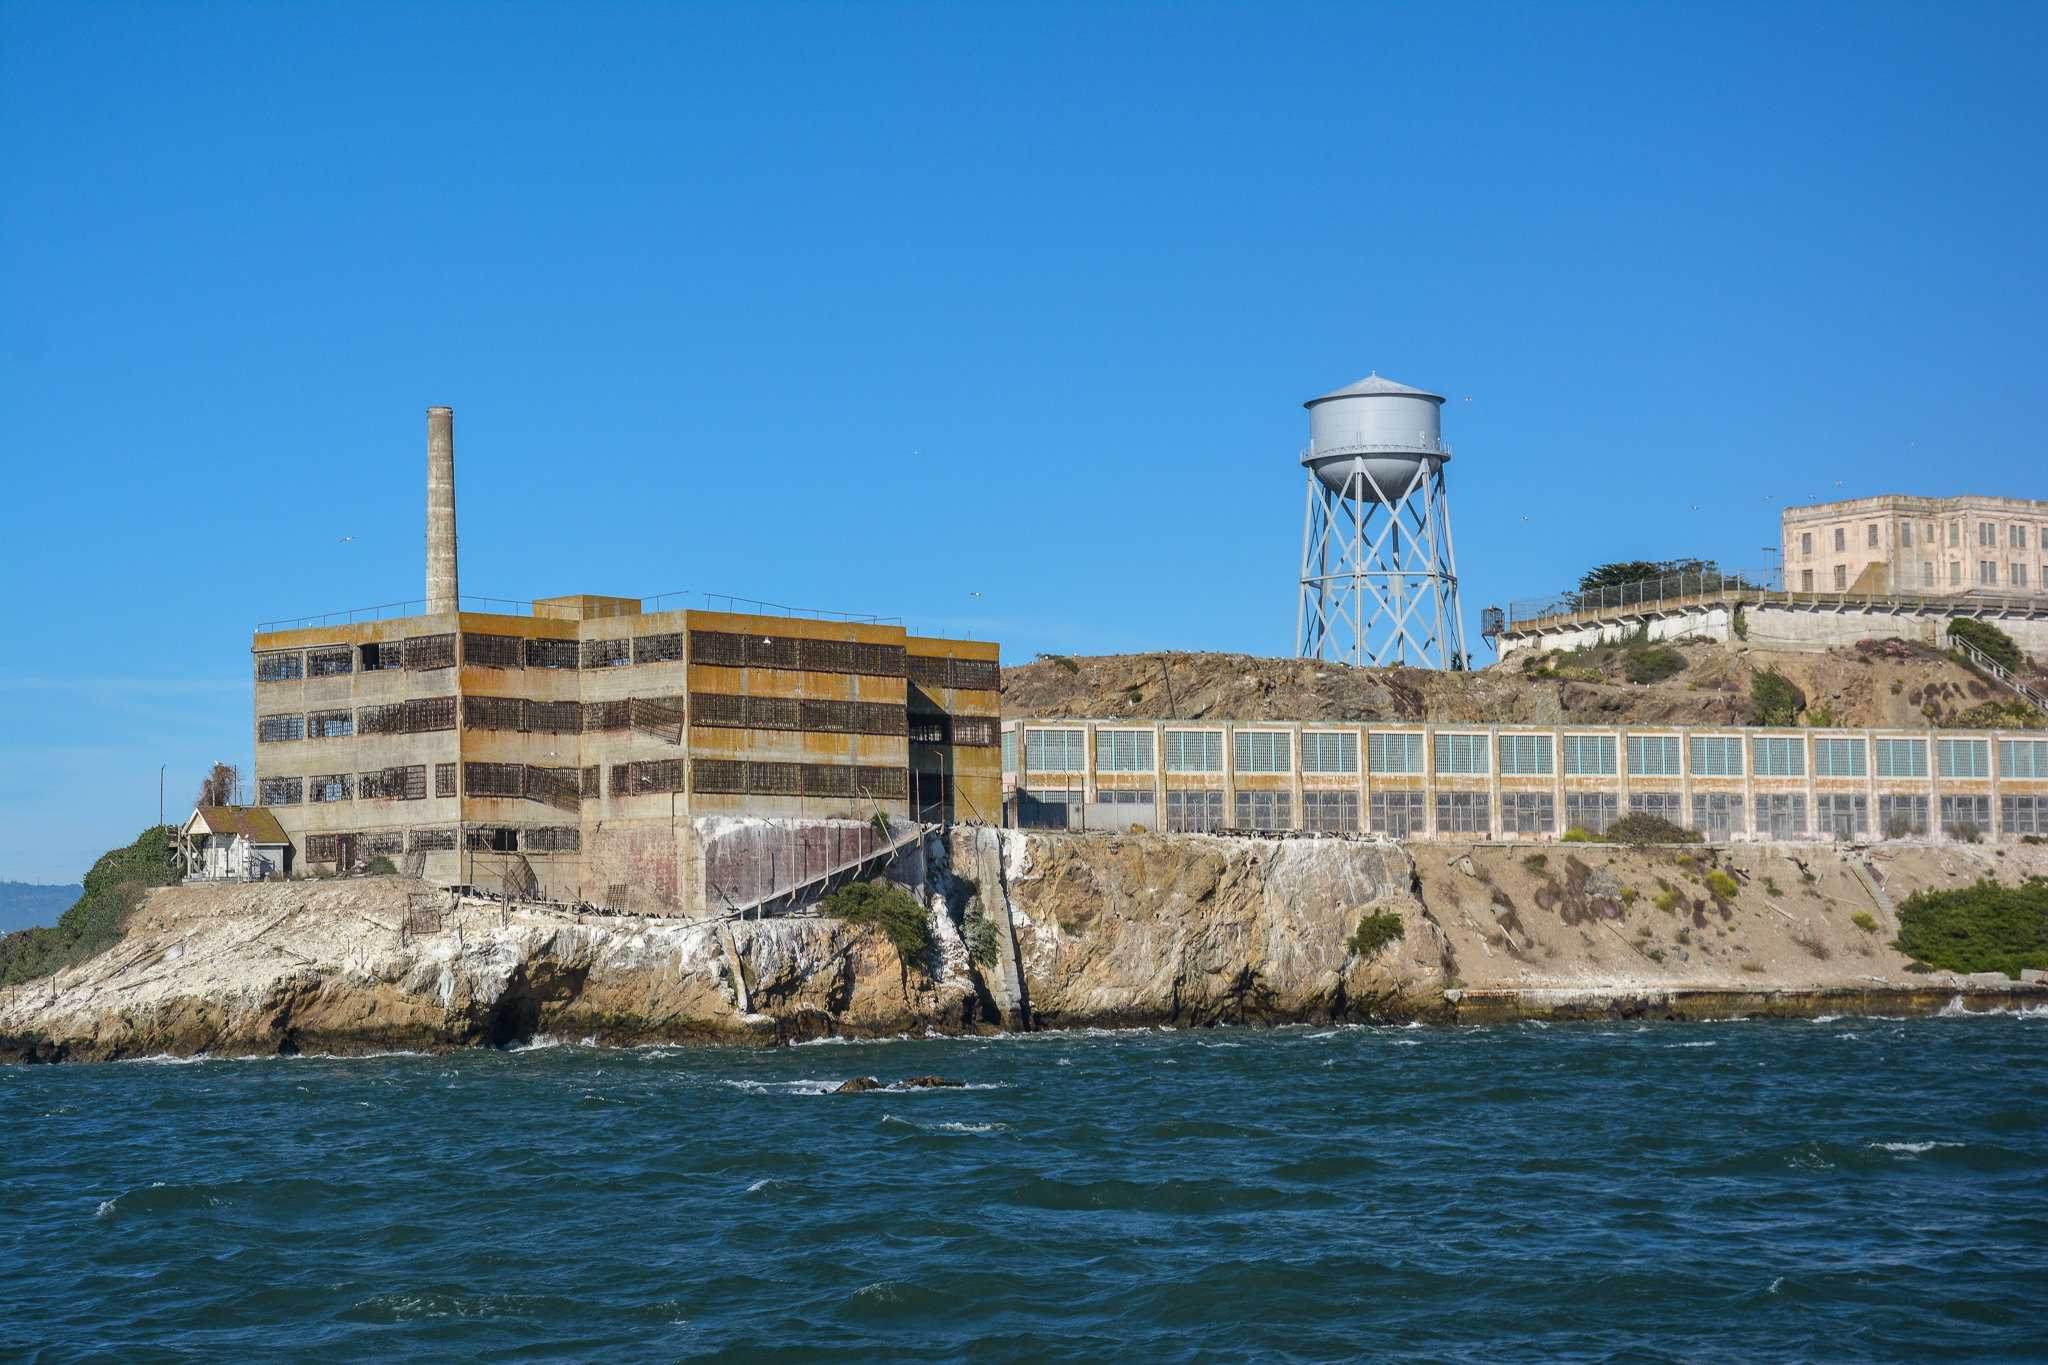 rocky shores of Alcatraz